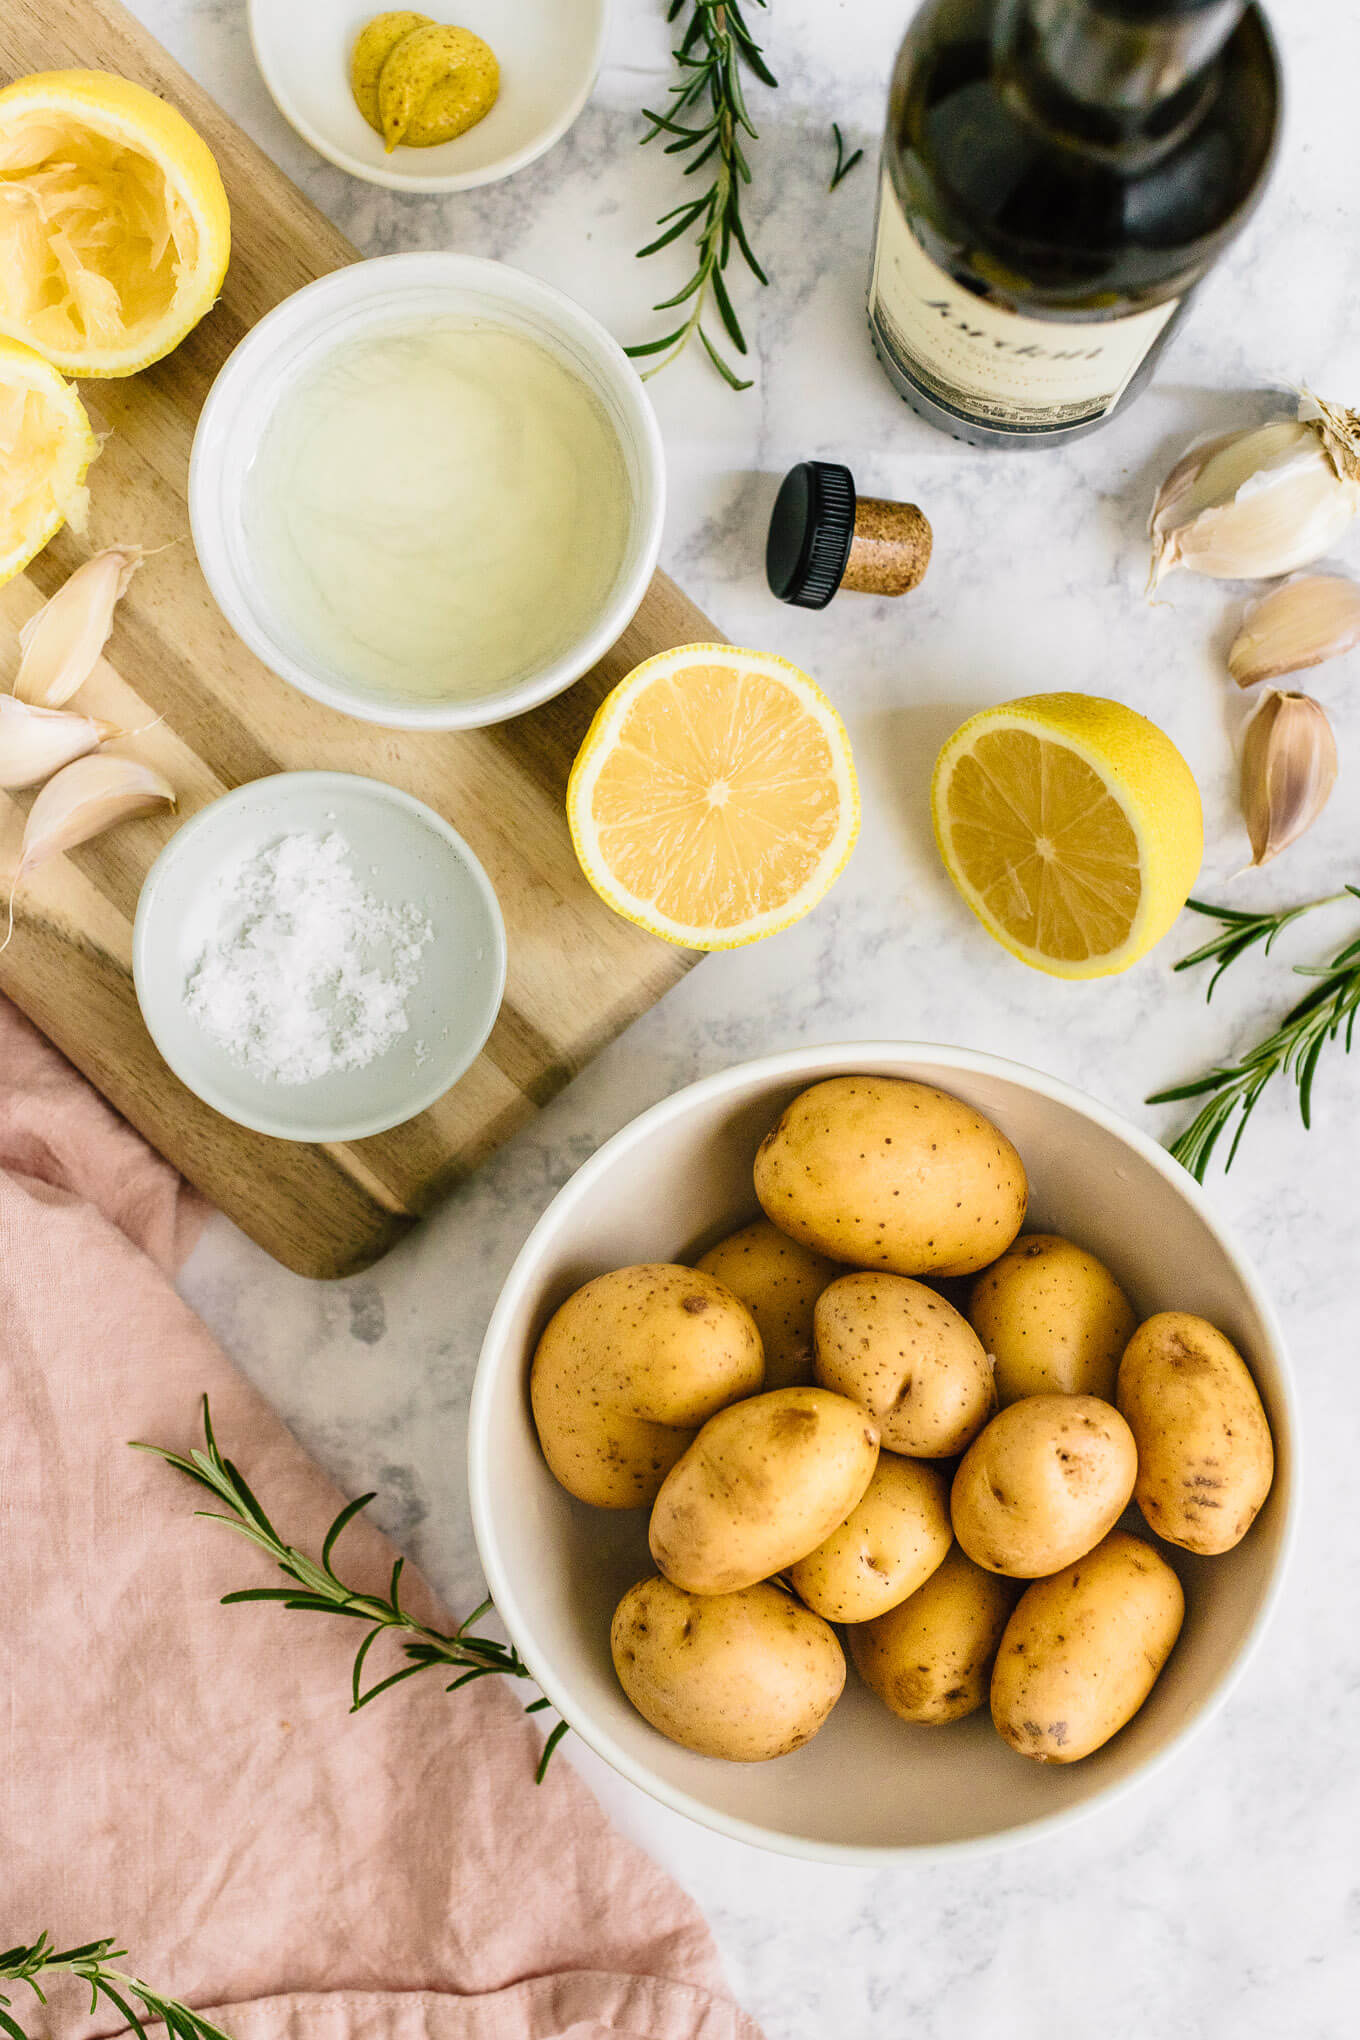 Ingredients for crispy lemon roasted potatoes